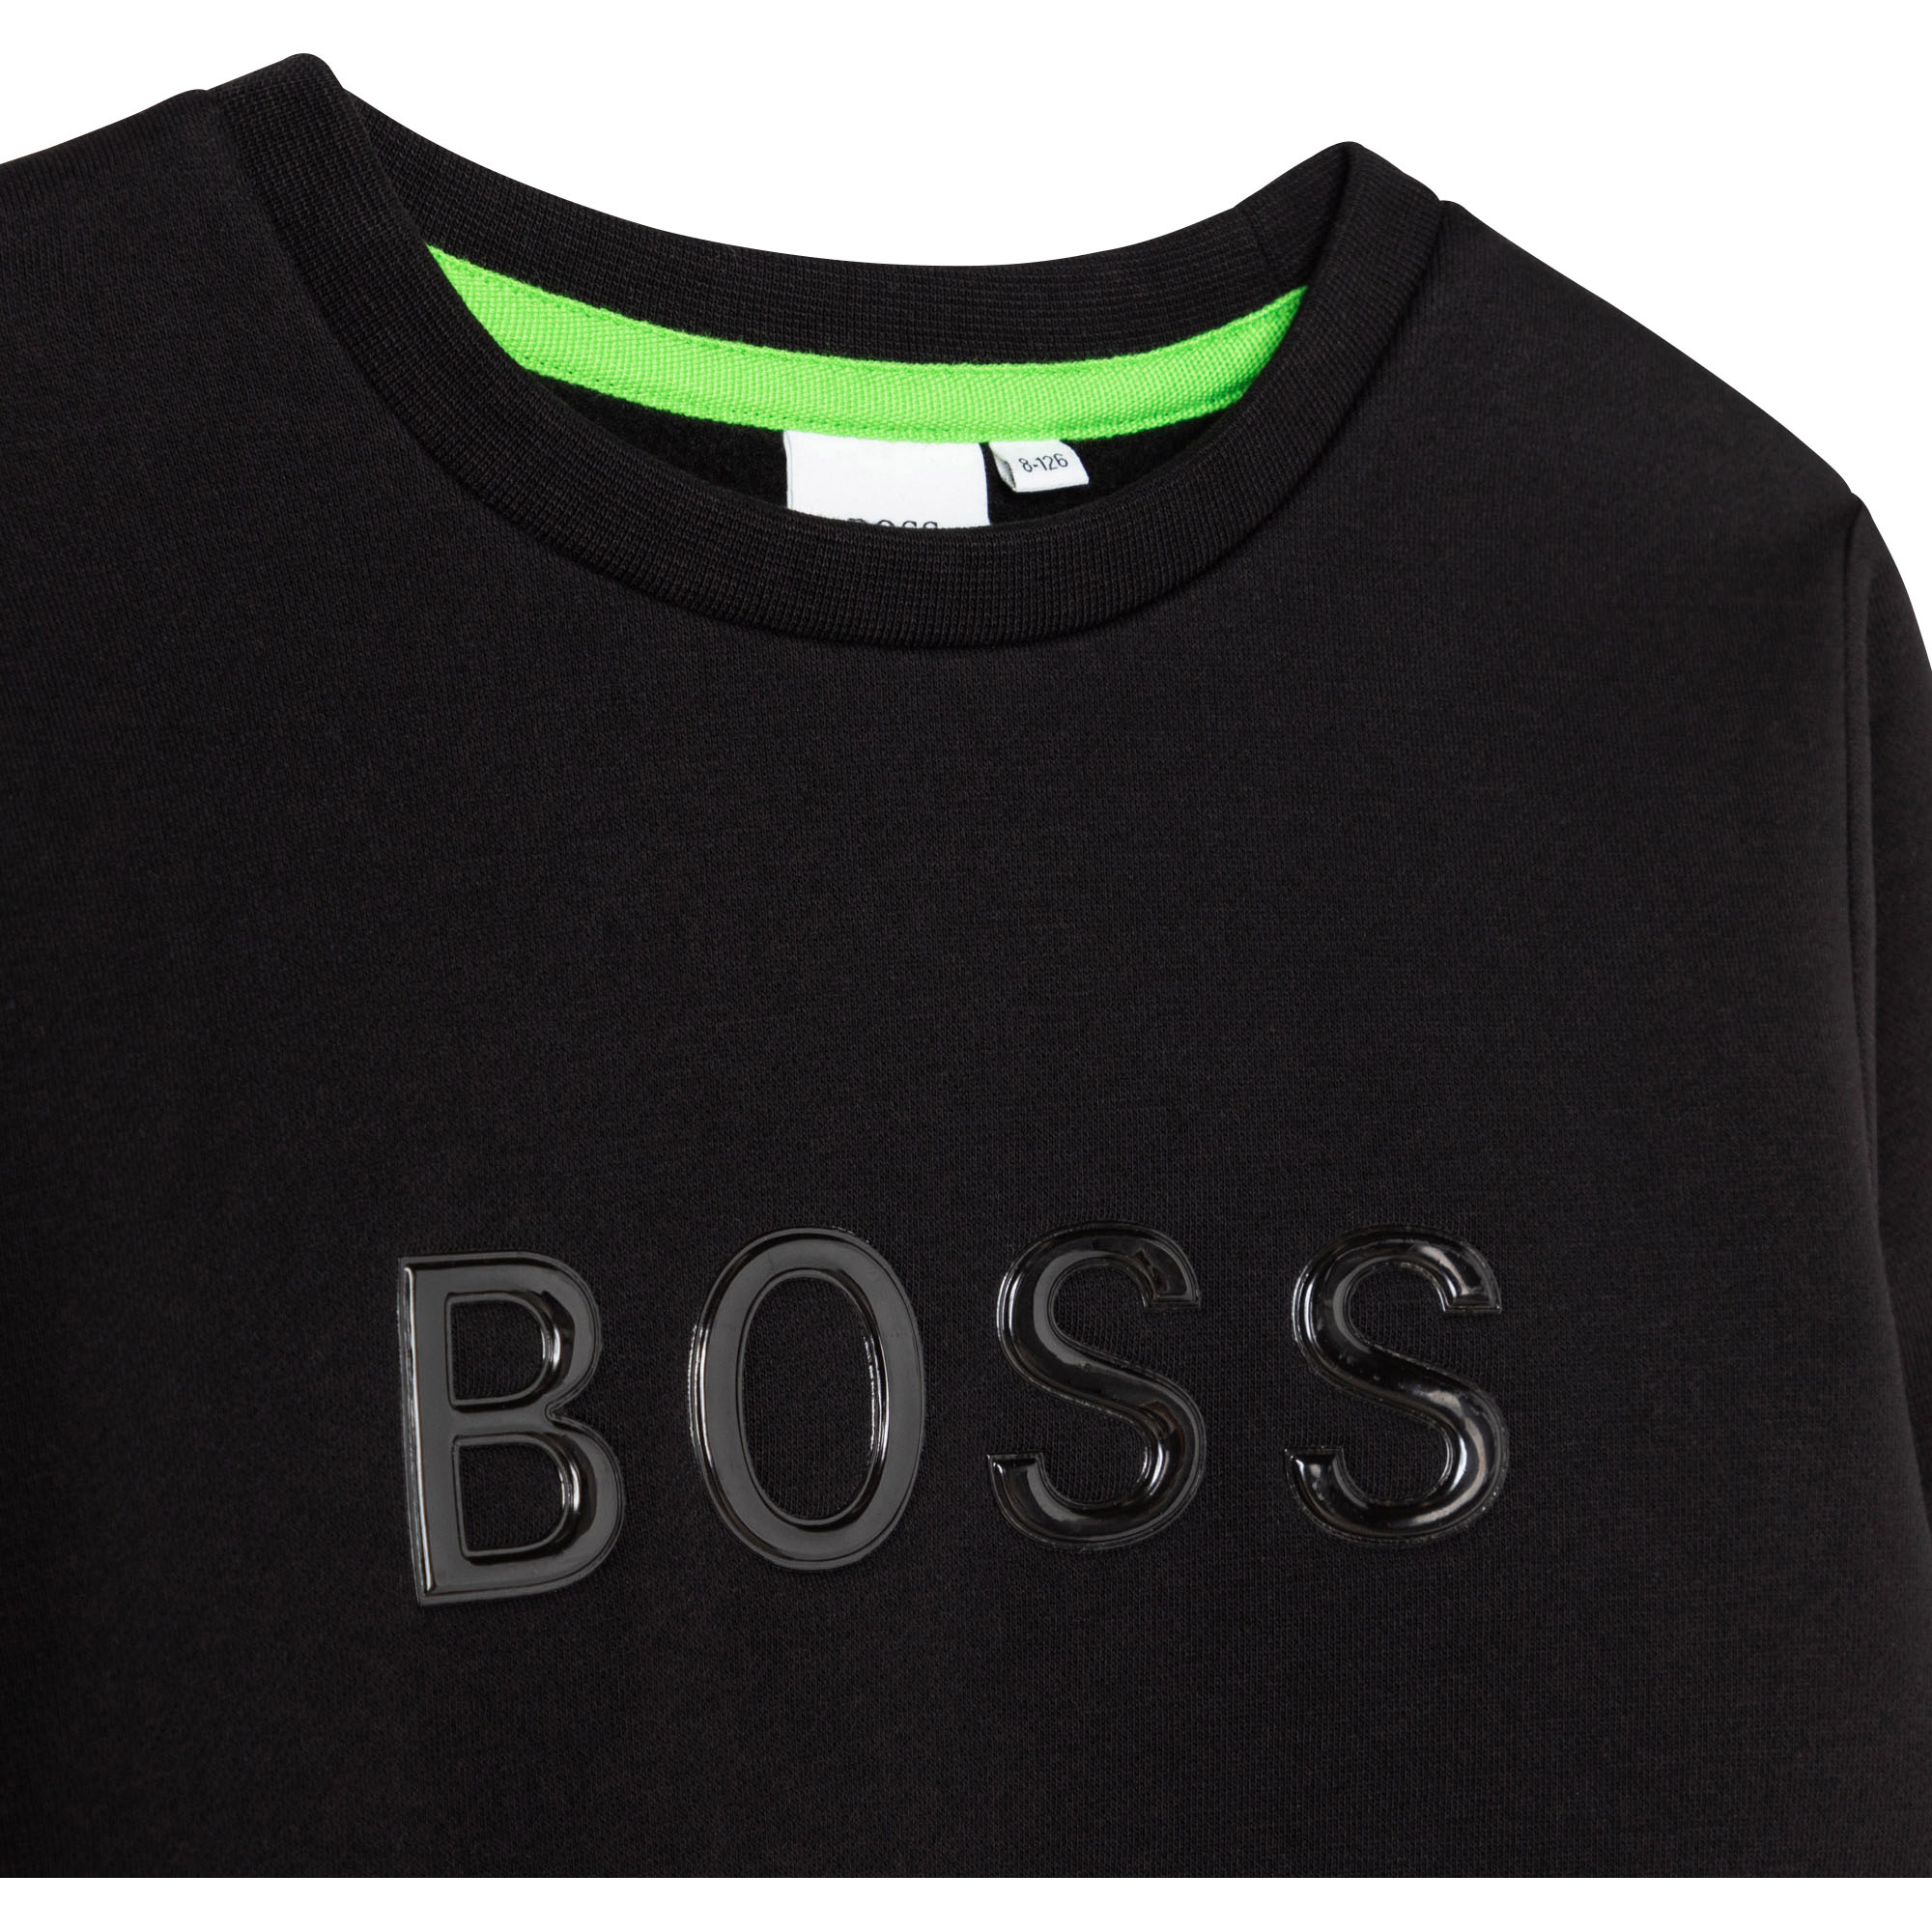 Fleece logo sweatshirt BOSS for BOY